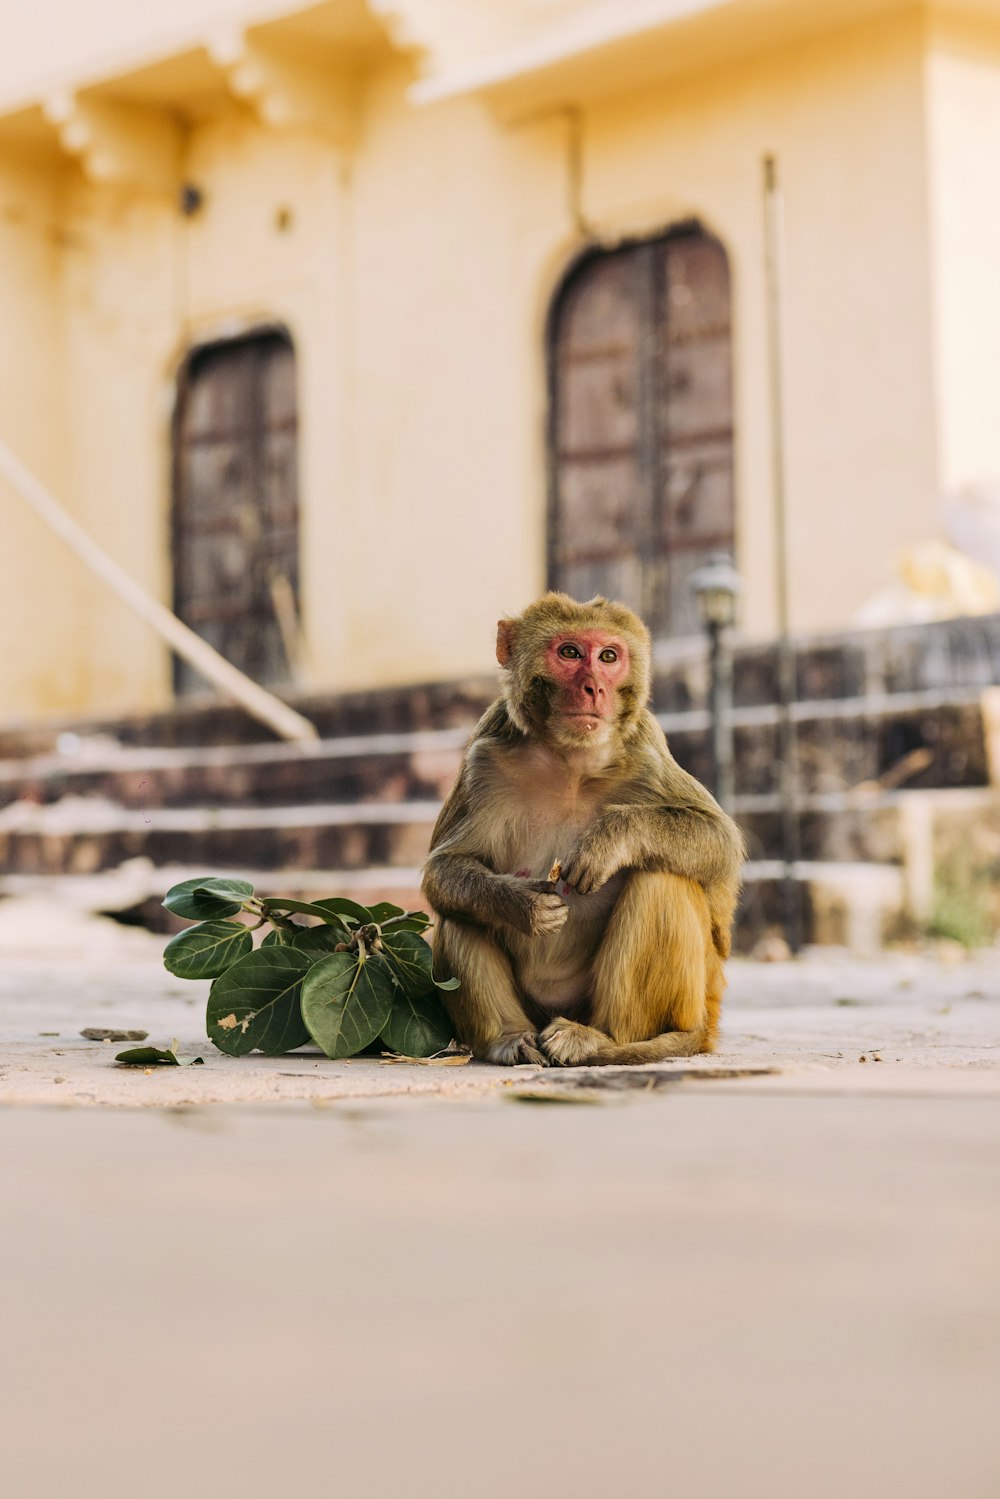 una piccola scimmia seduta a terra accanto a una pianta